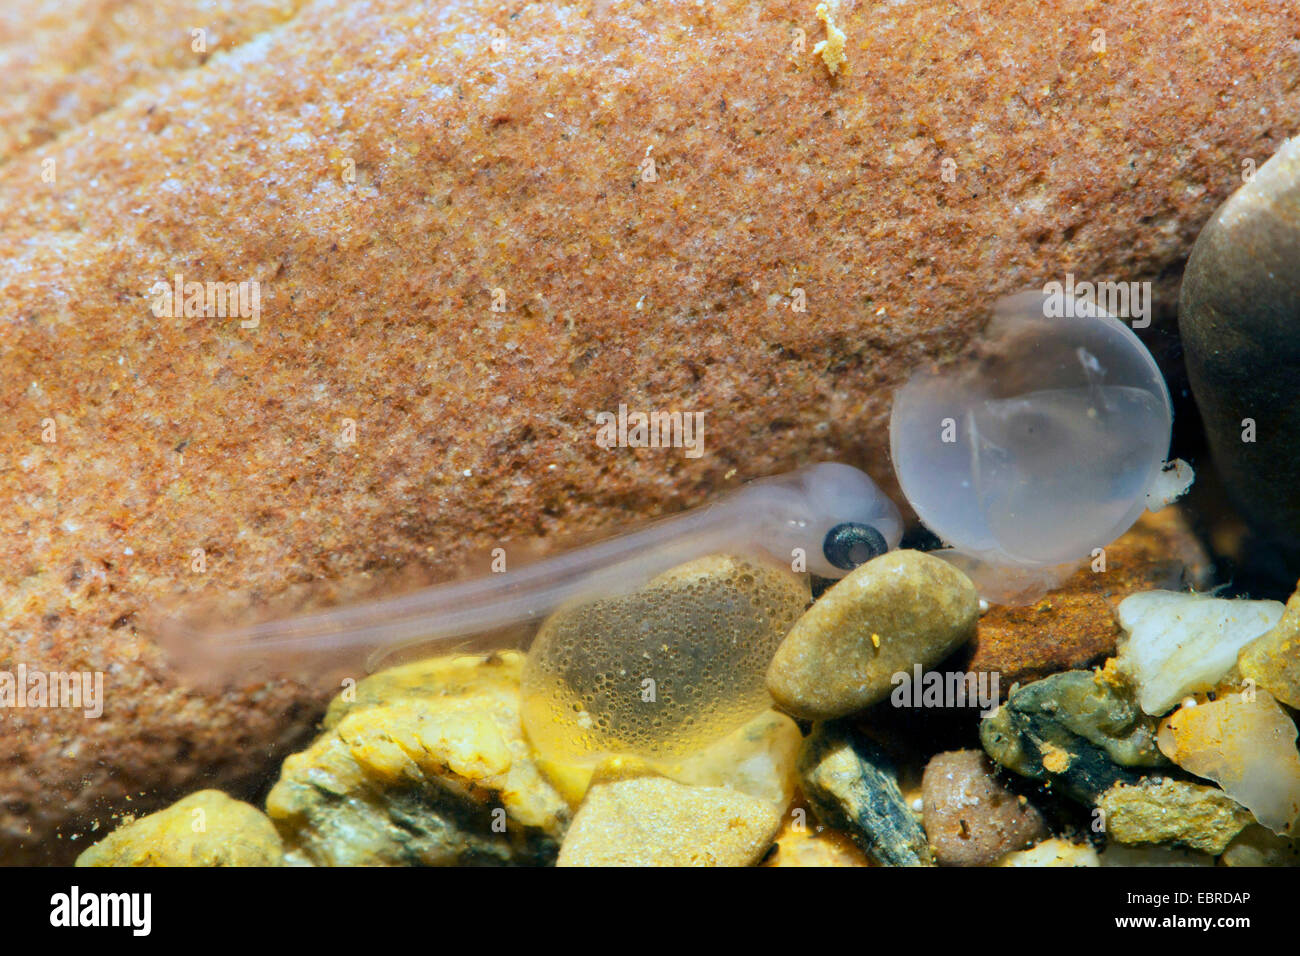 Danube salmon, huchen (Hucho hucho), yolk sca larva with egg shell on pebbles, Germany Stock Photo